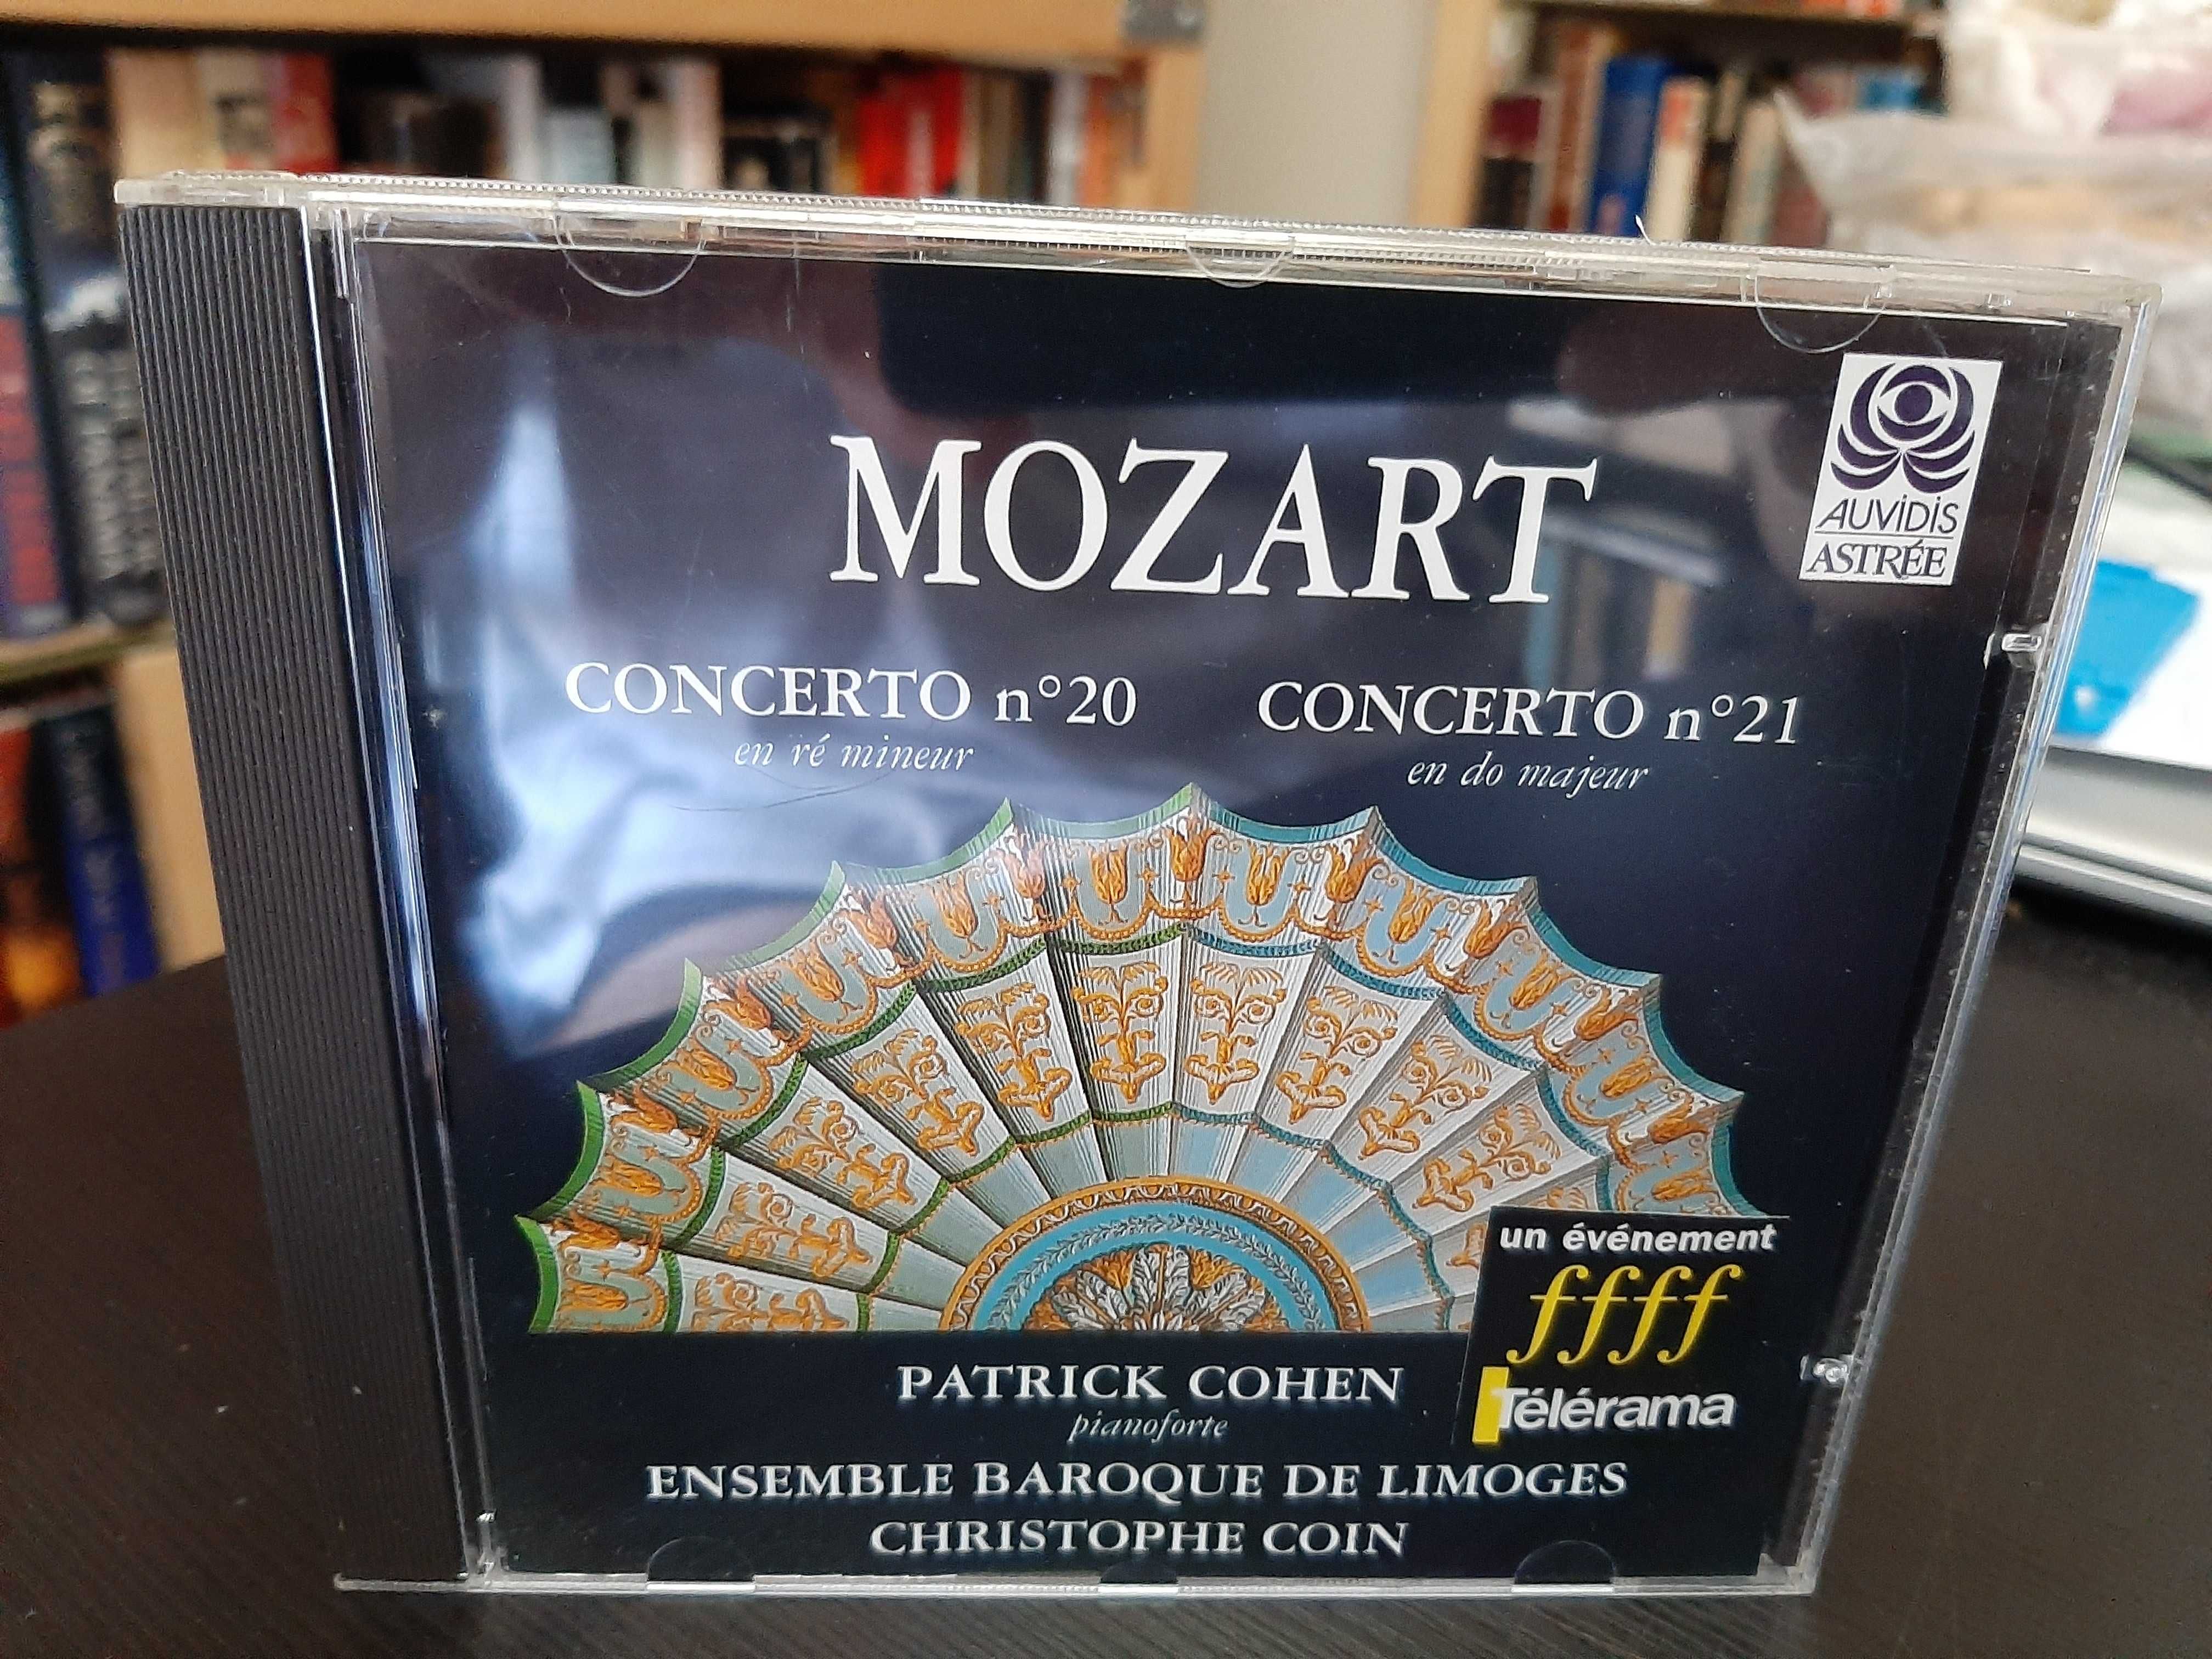 Mozart - Piano concertos nº 20 e 21 - Patrick Cohen - Baroque Limoges